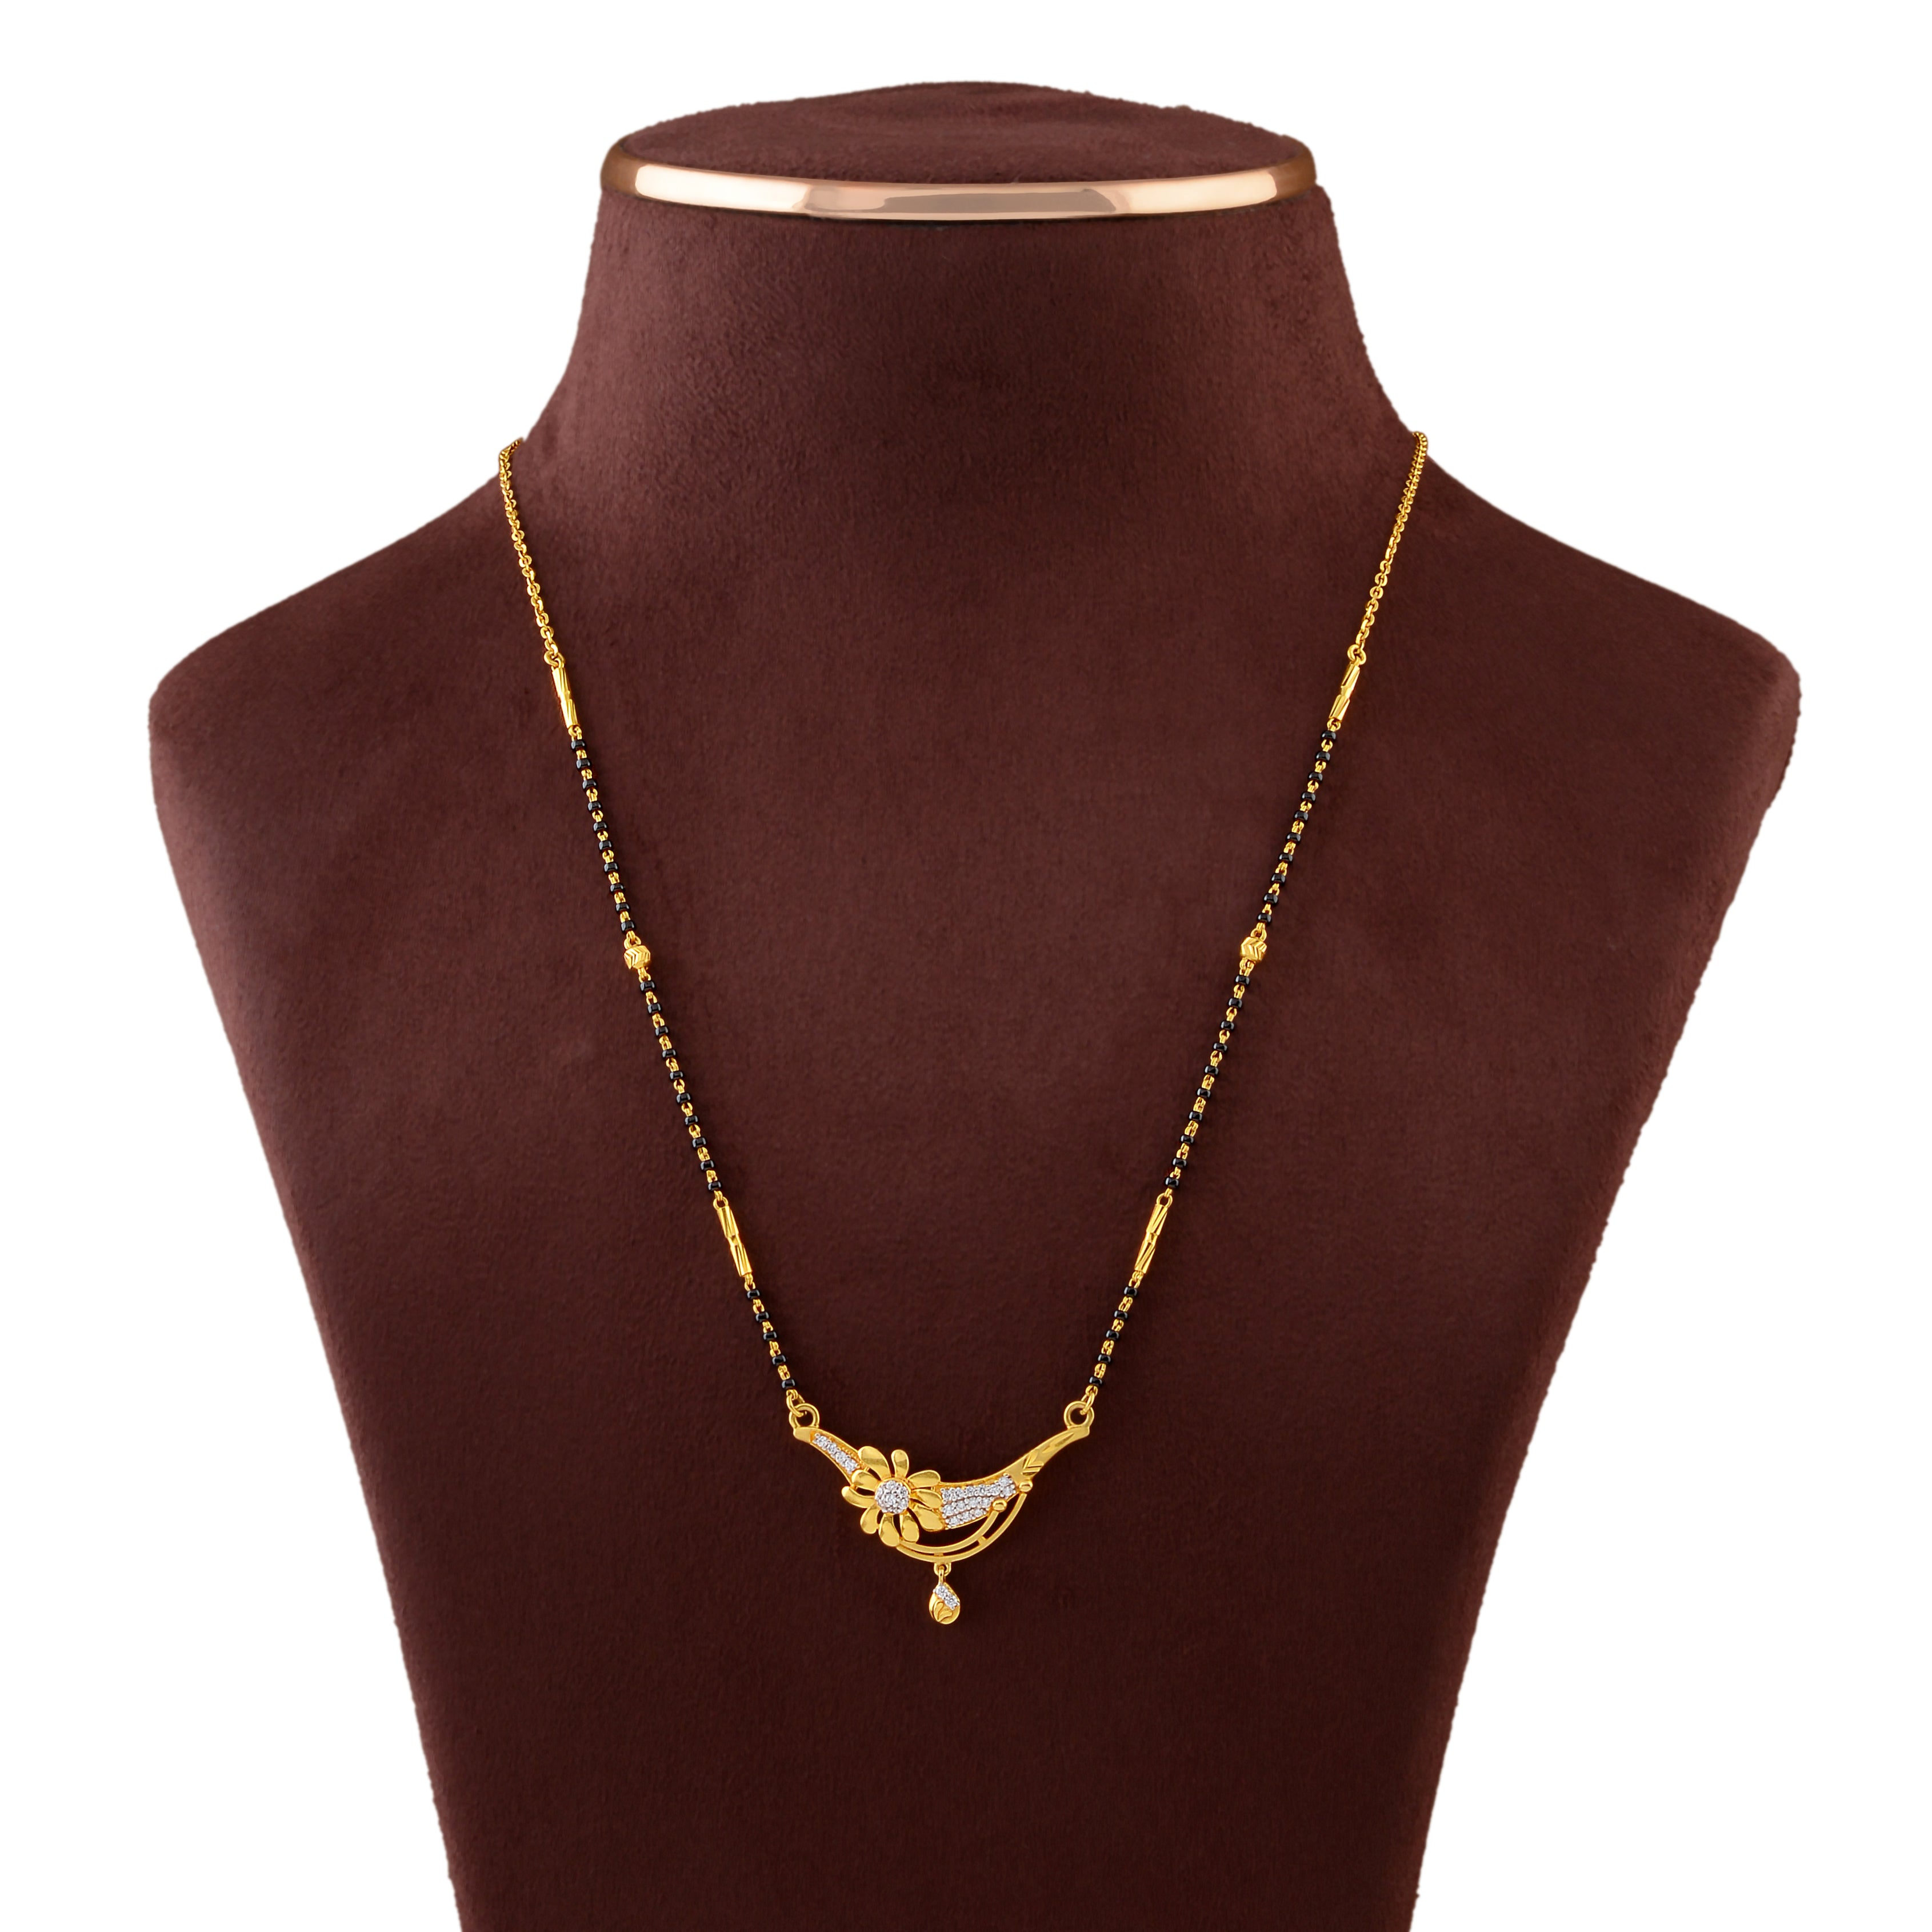 Handmade Gold Mangalsutra Necklace